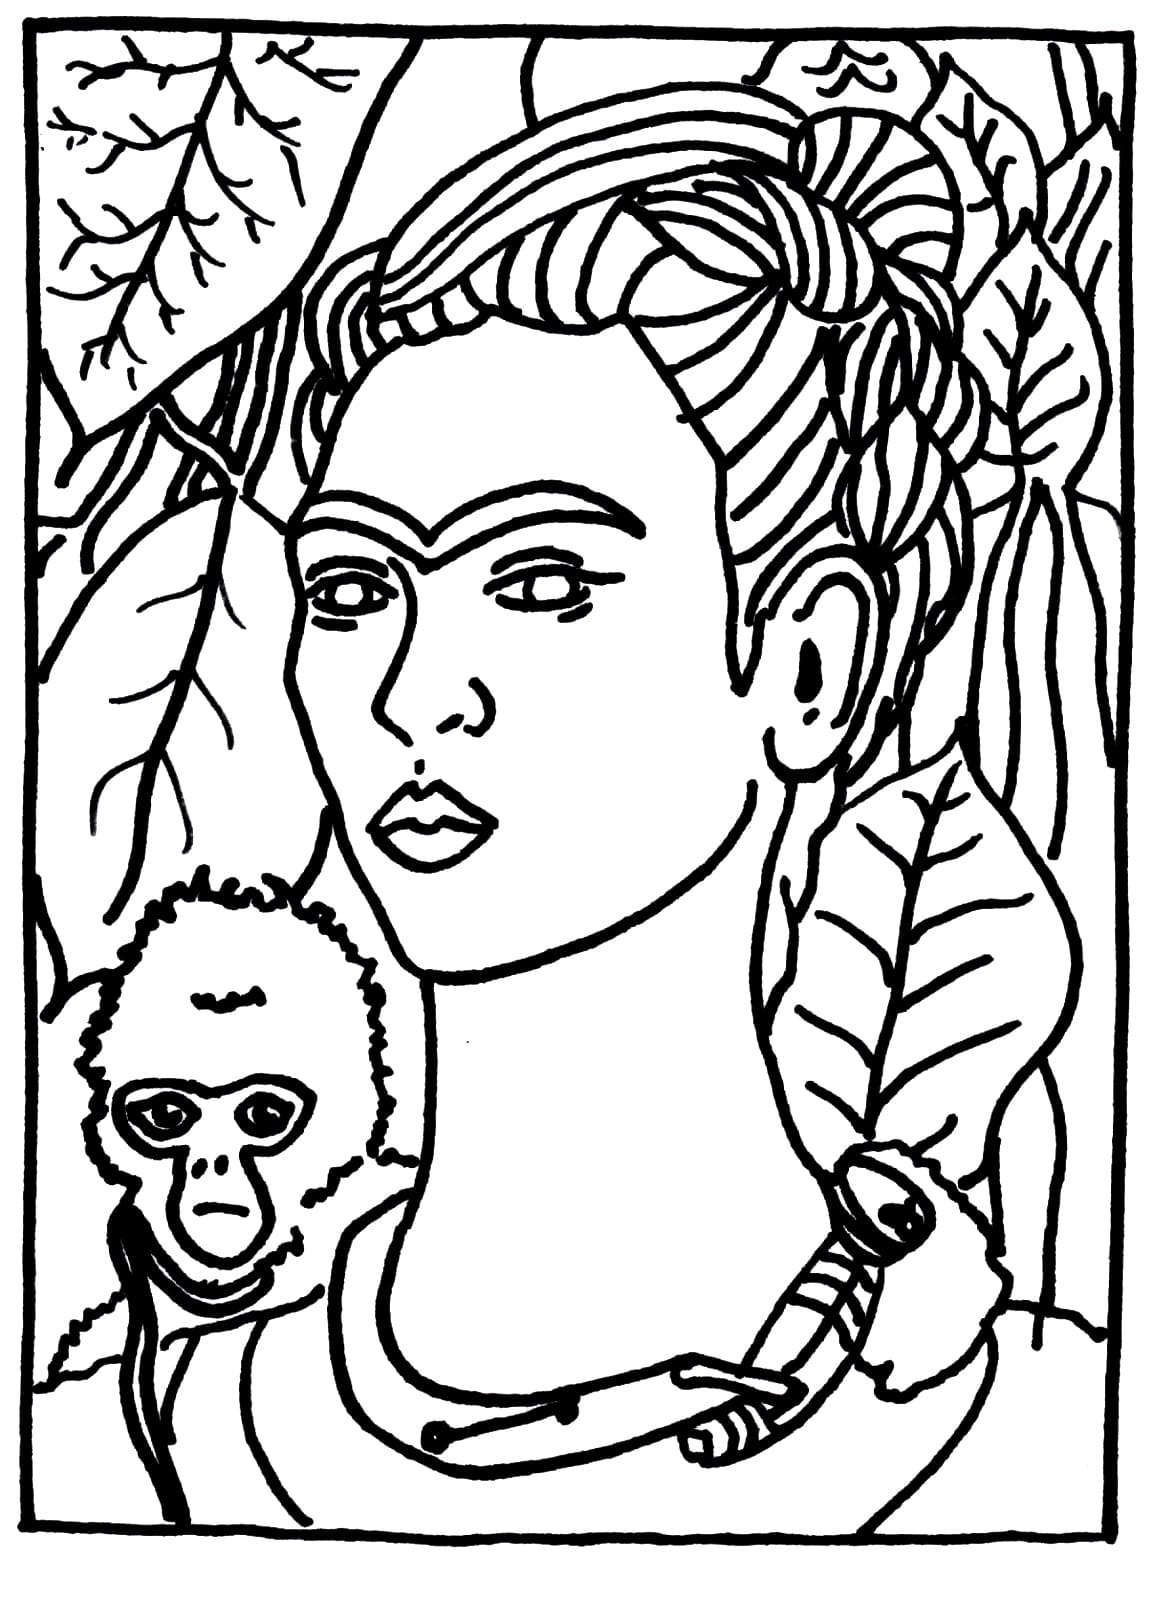 Frida Kahlo 4 coloring page